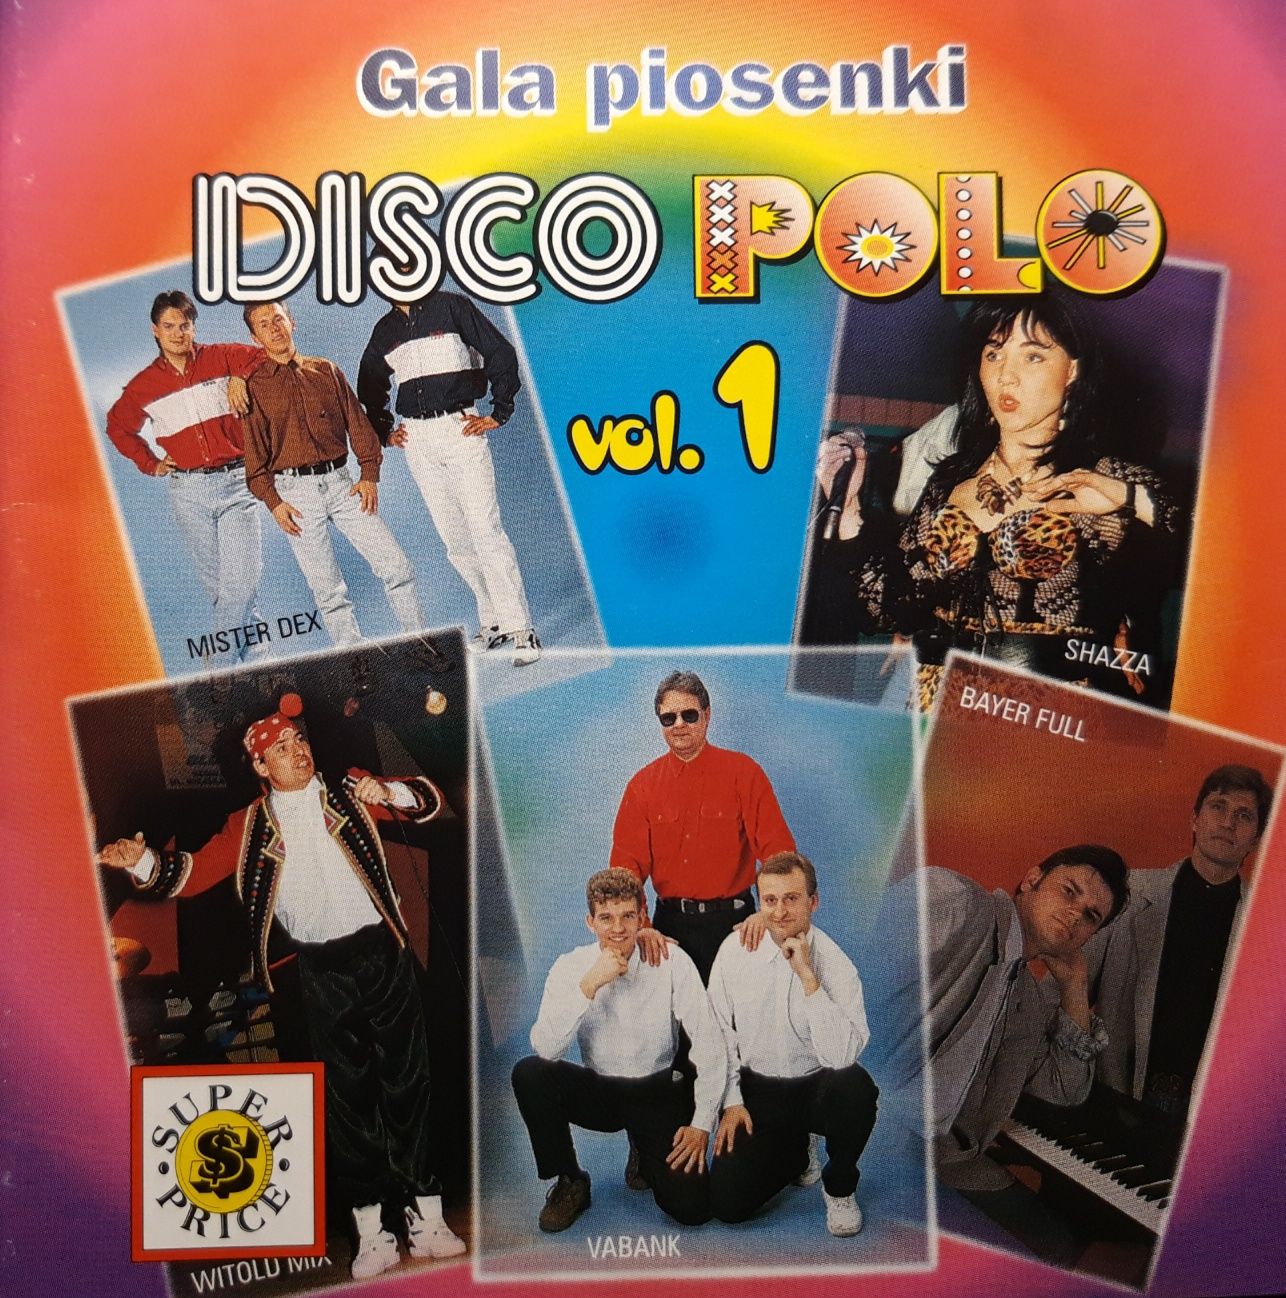 Gala Piosenki Disco Polo Vol. 1 (CD, 1997)